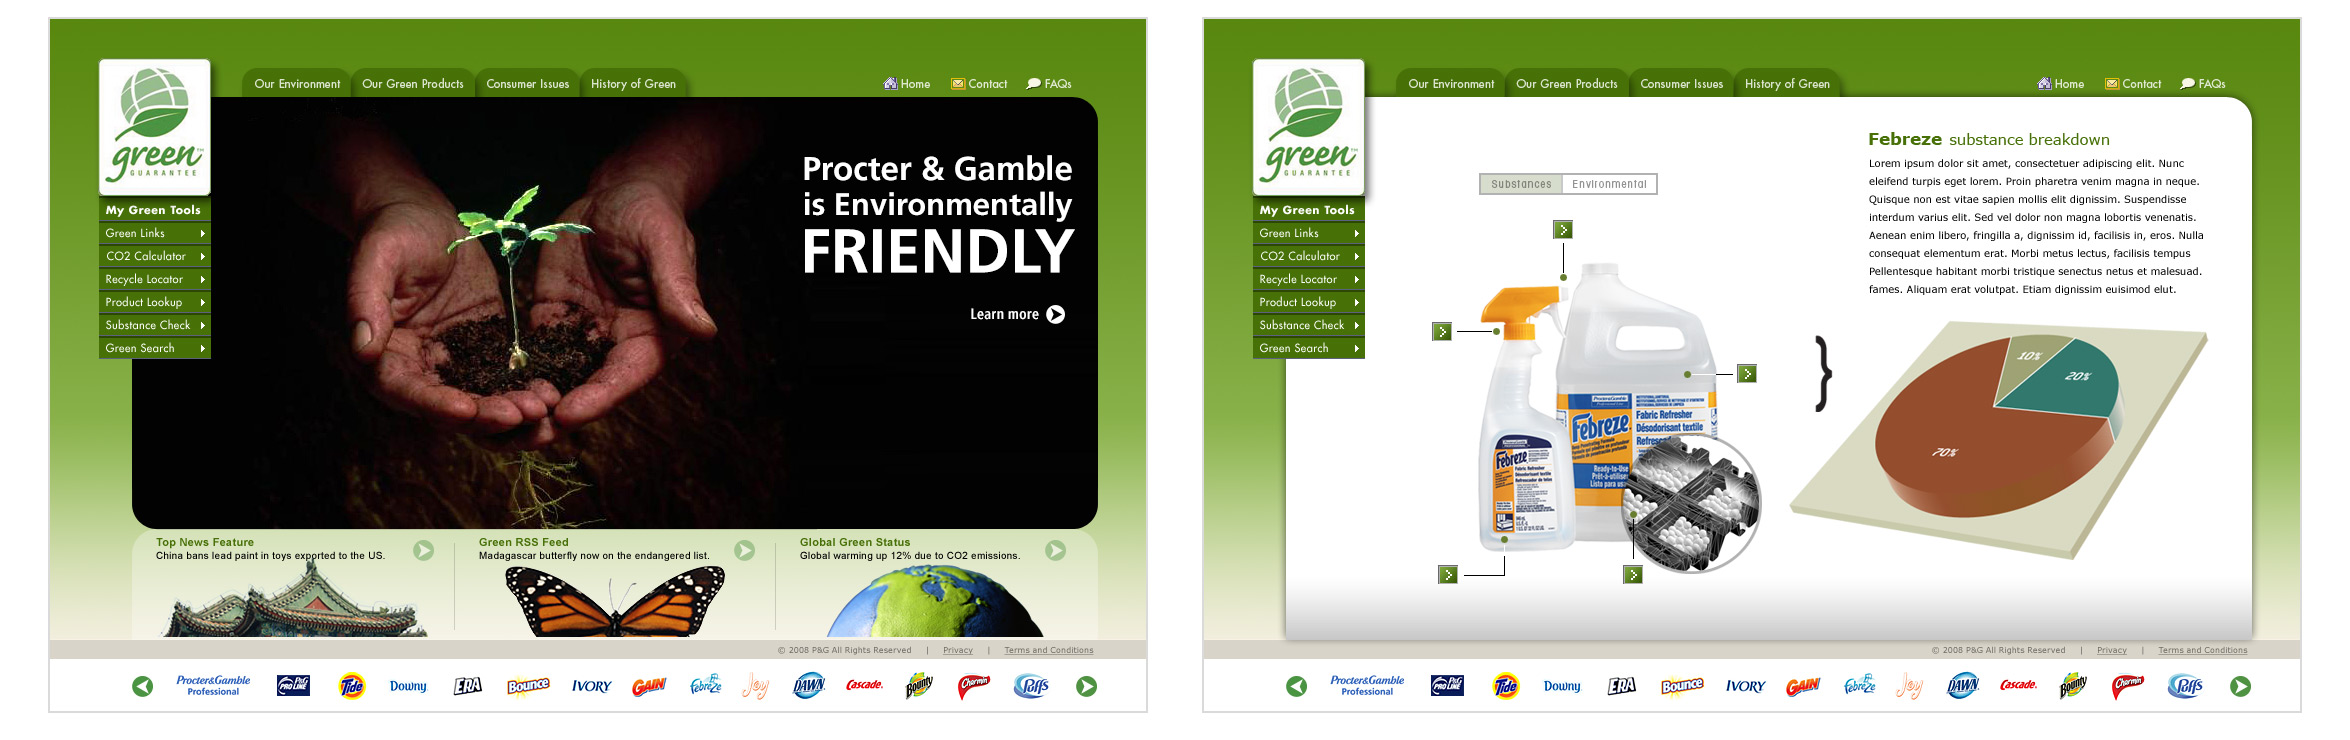 Green Guarantee website